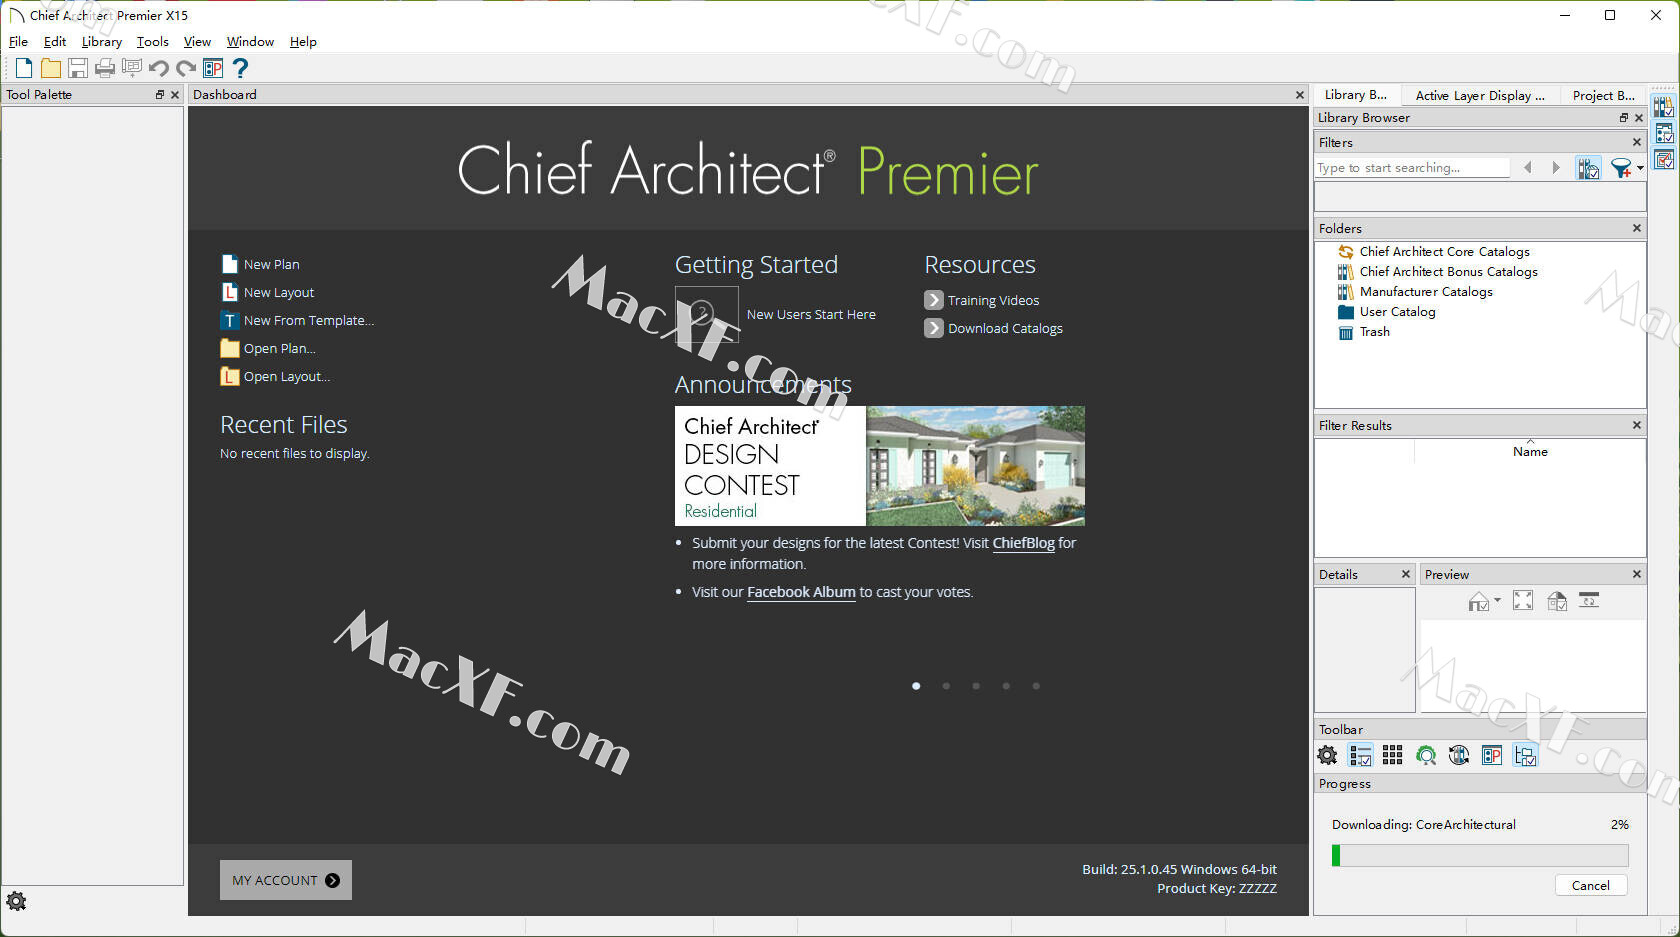 instal the new Chief Architect Premier X15 v25.3.0.77 + Interiors